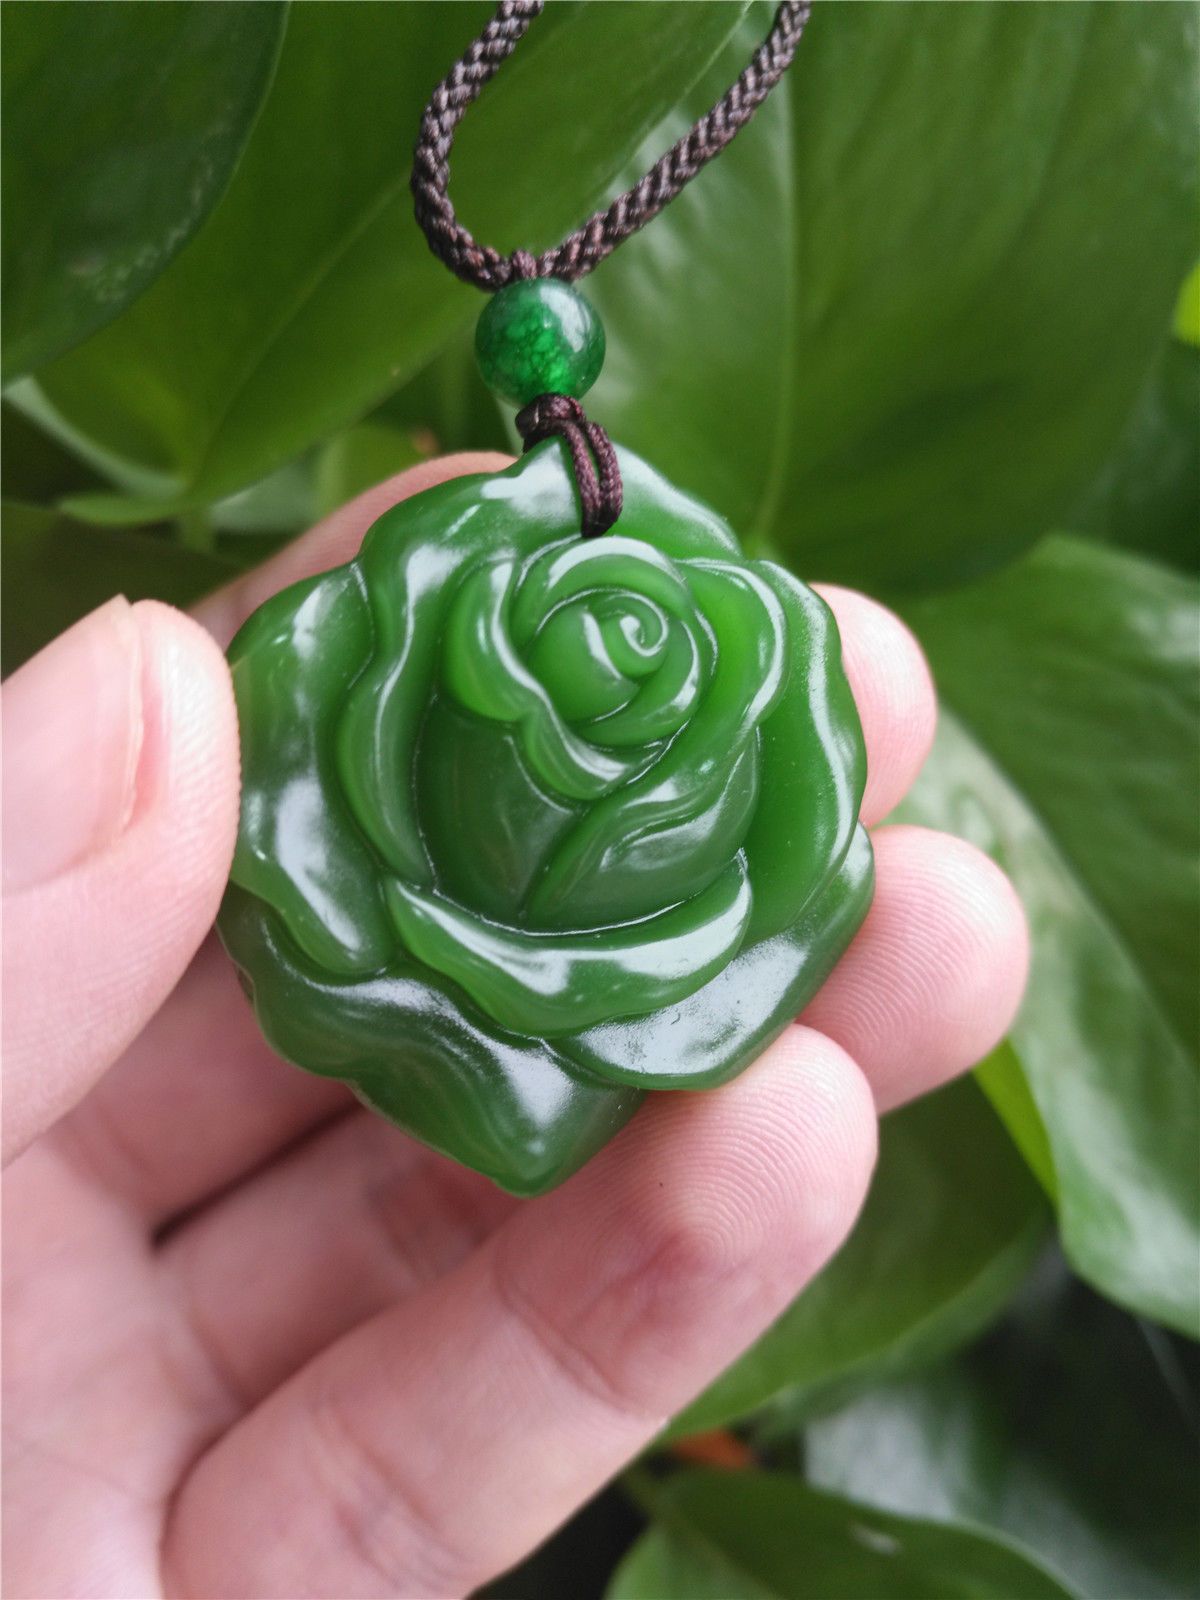 Natural Green Jade Rose Flower Goldfish Necklace Pendant HandCarved Lucky Amulet